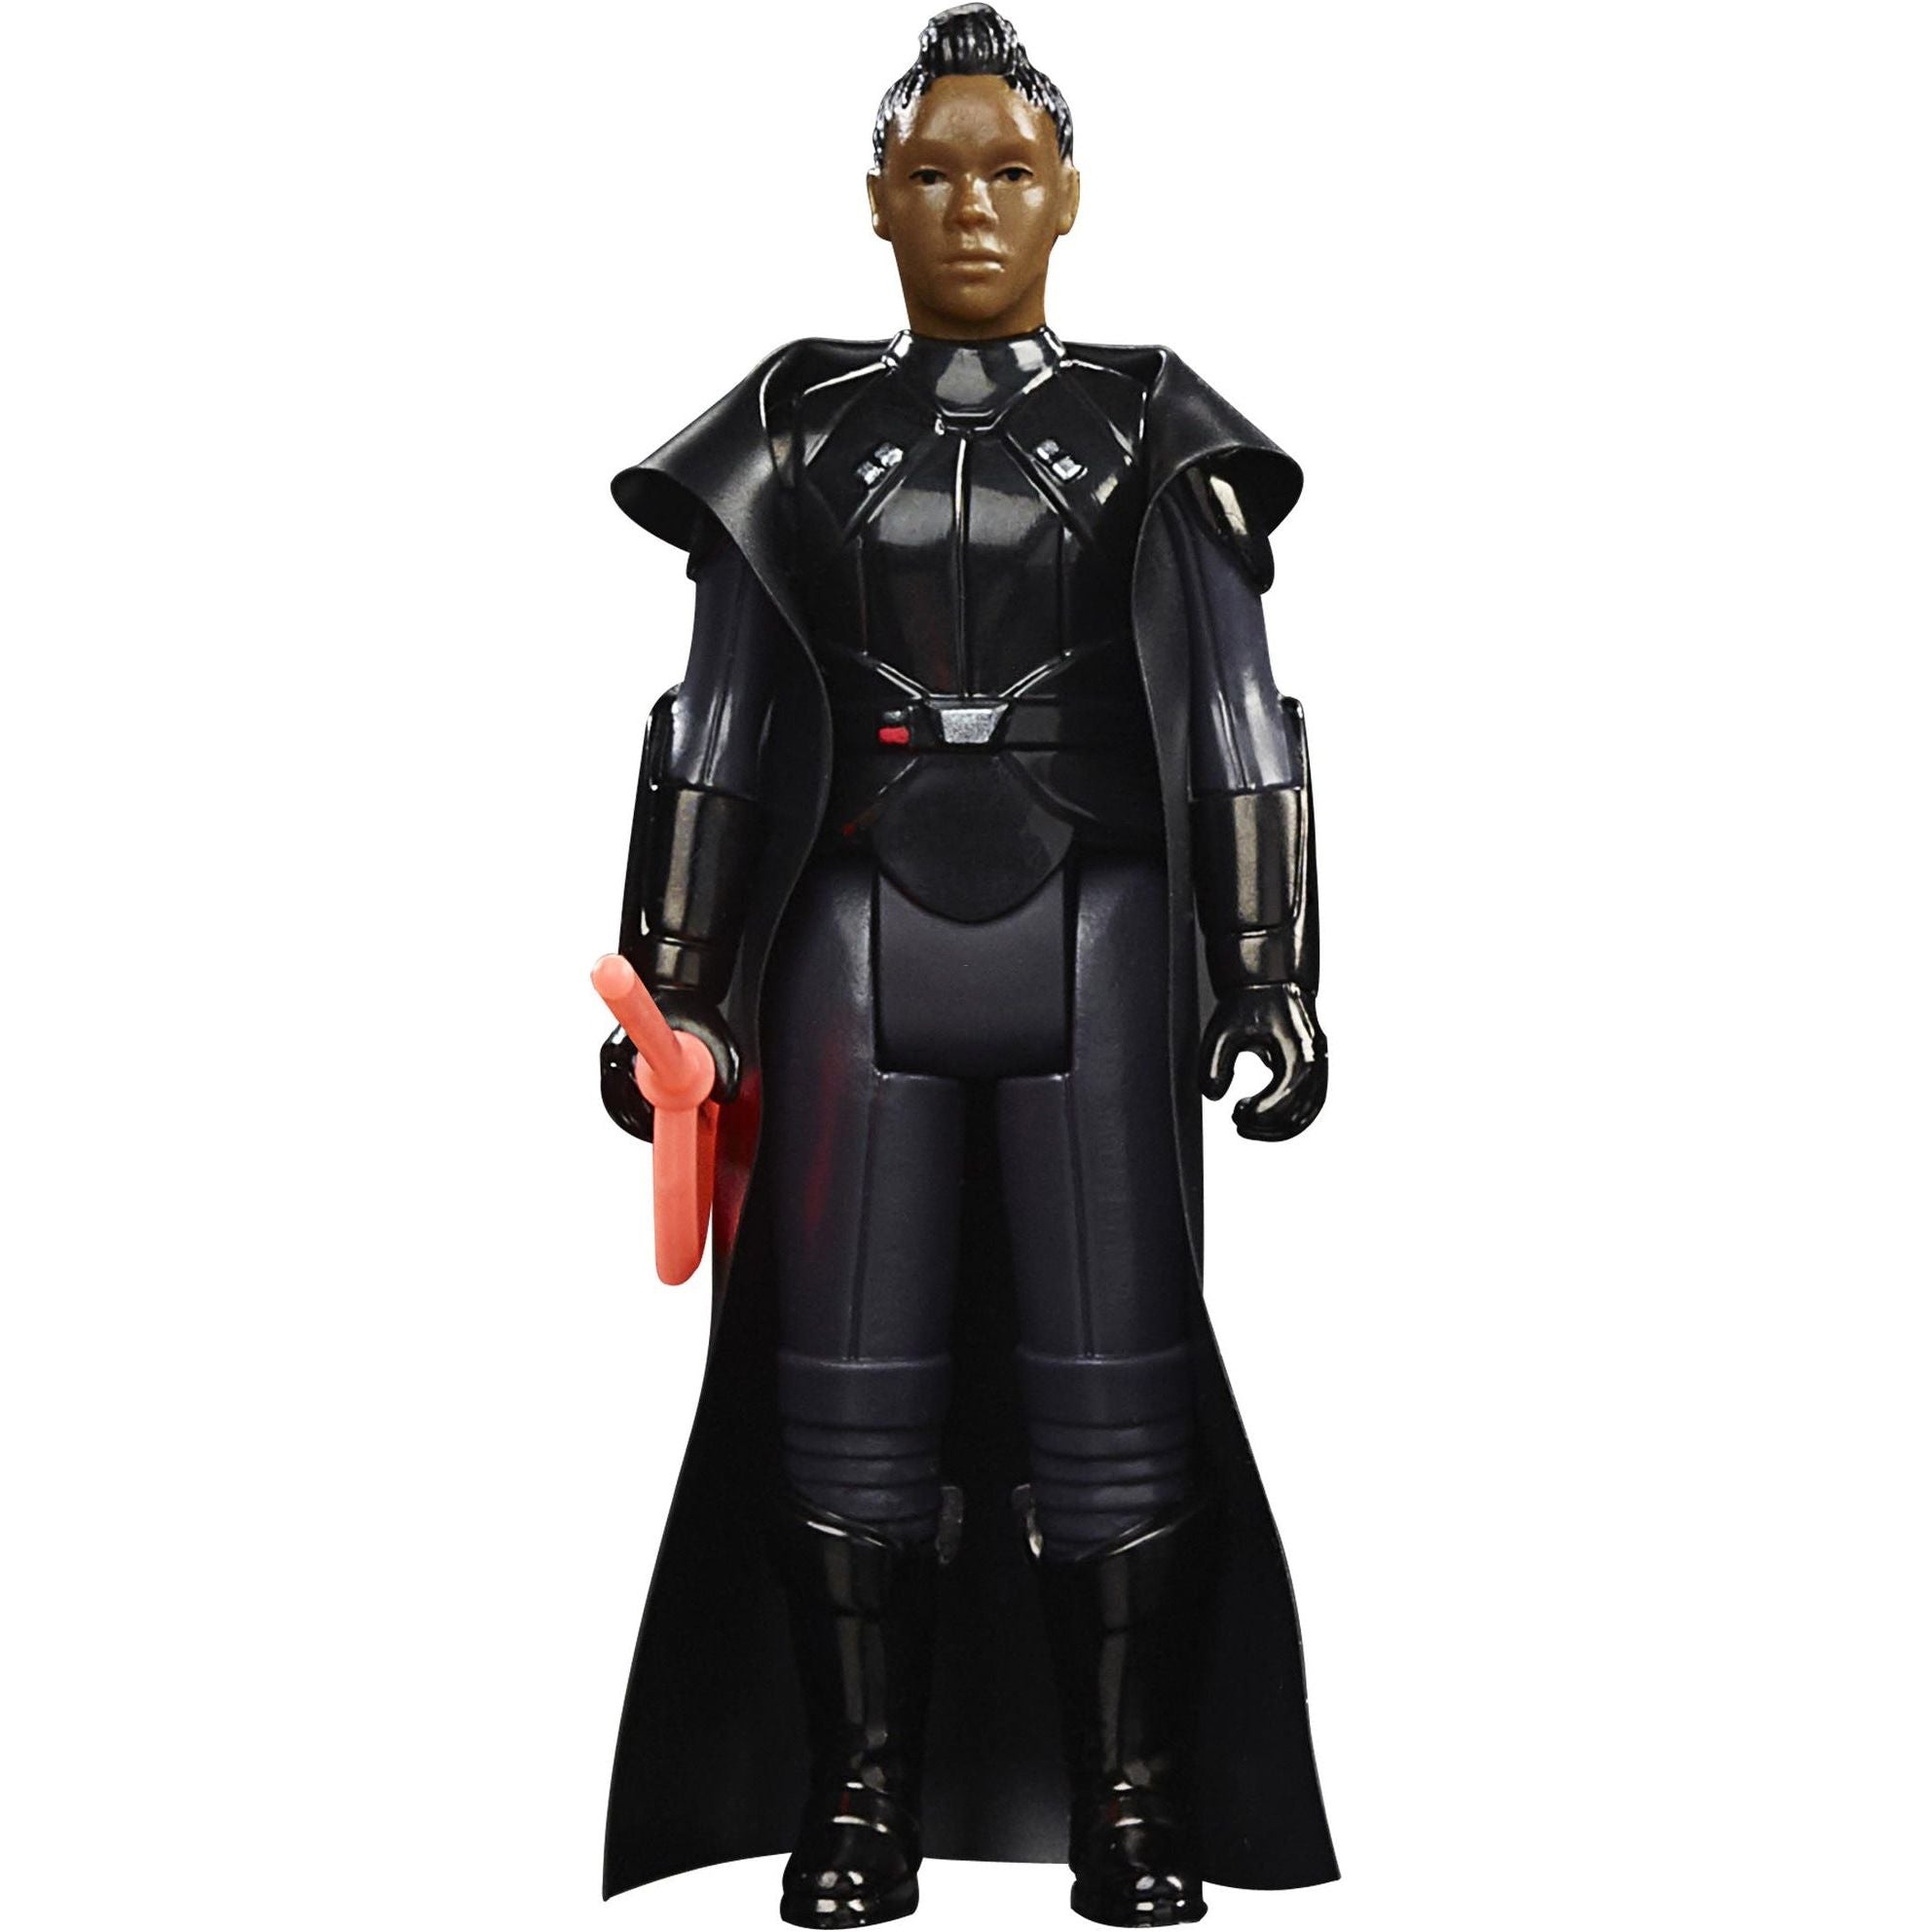 Hasbro Star Wars Retro-Kollektion Reva (Third Sister), 9.5 cm große Action-Figur zu Star Wars